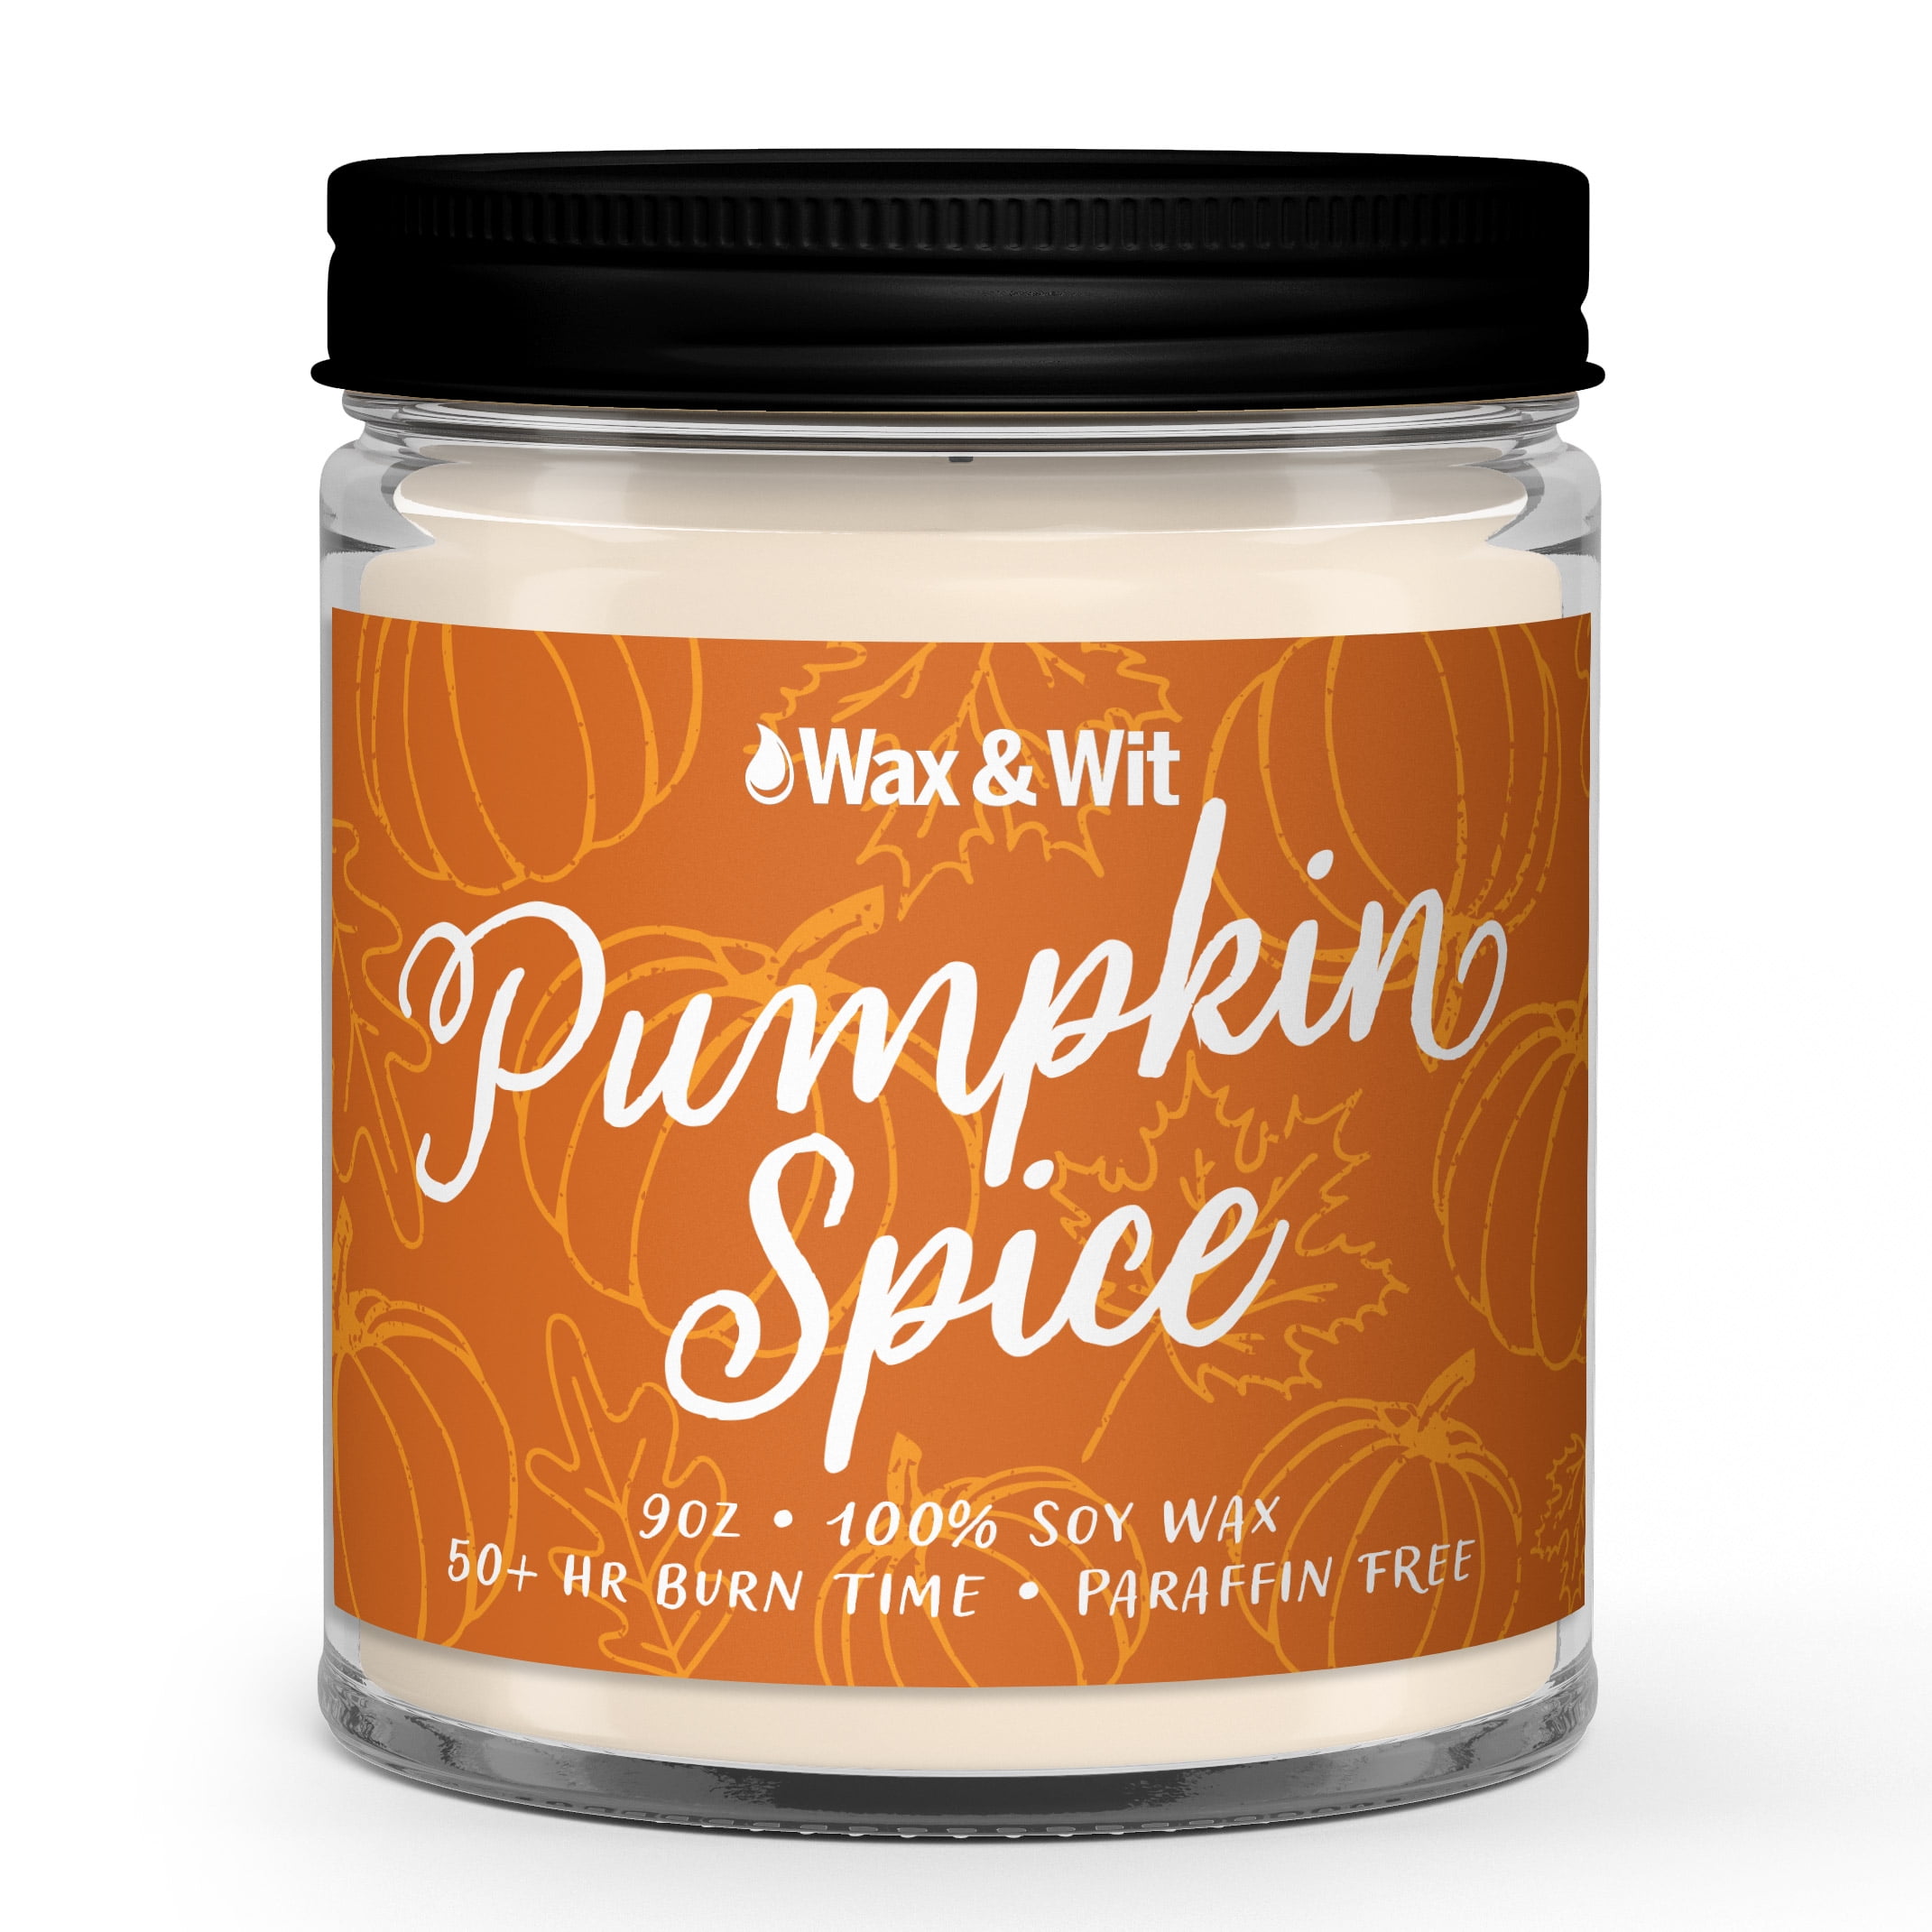 Fall Scented Amber Jar Candle Pumpkin Spice Latte Wooden Wick Wax Melts The Great Pumpkin